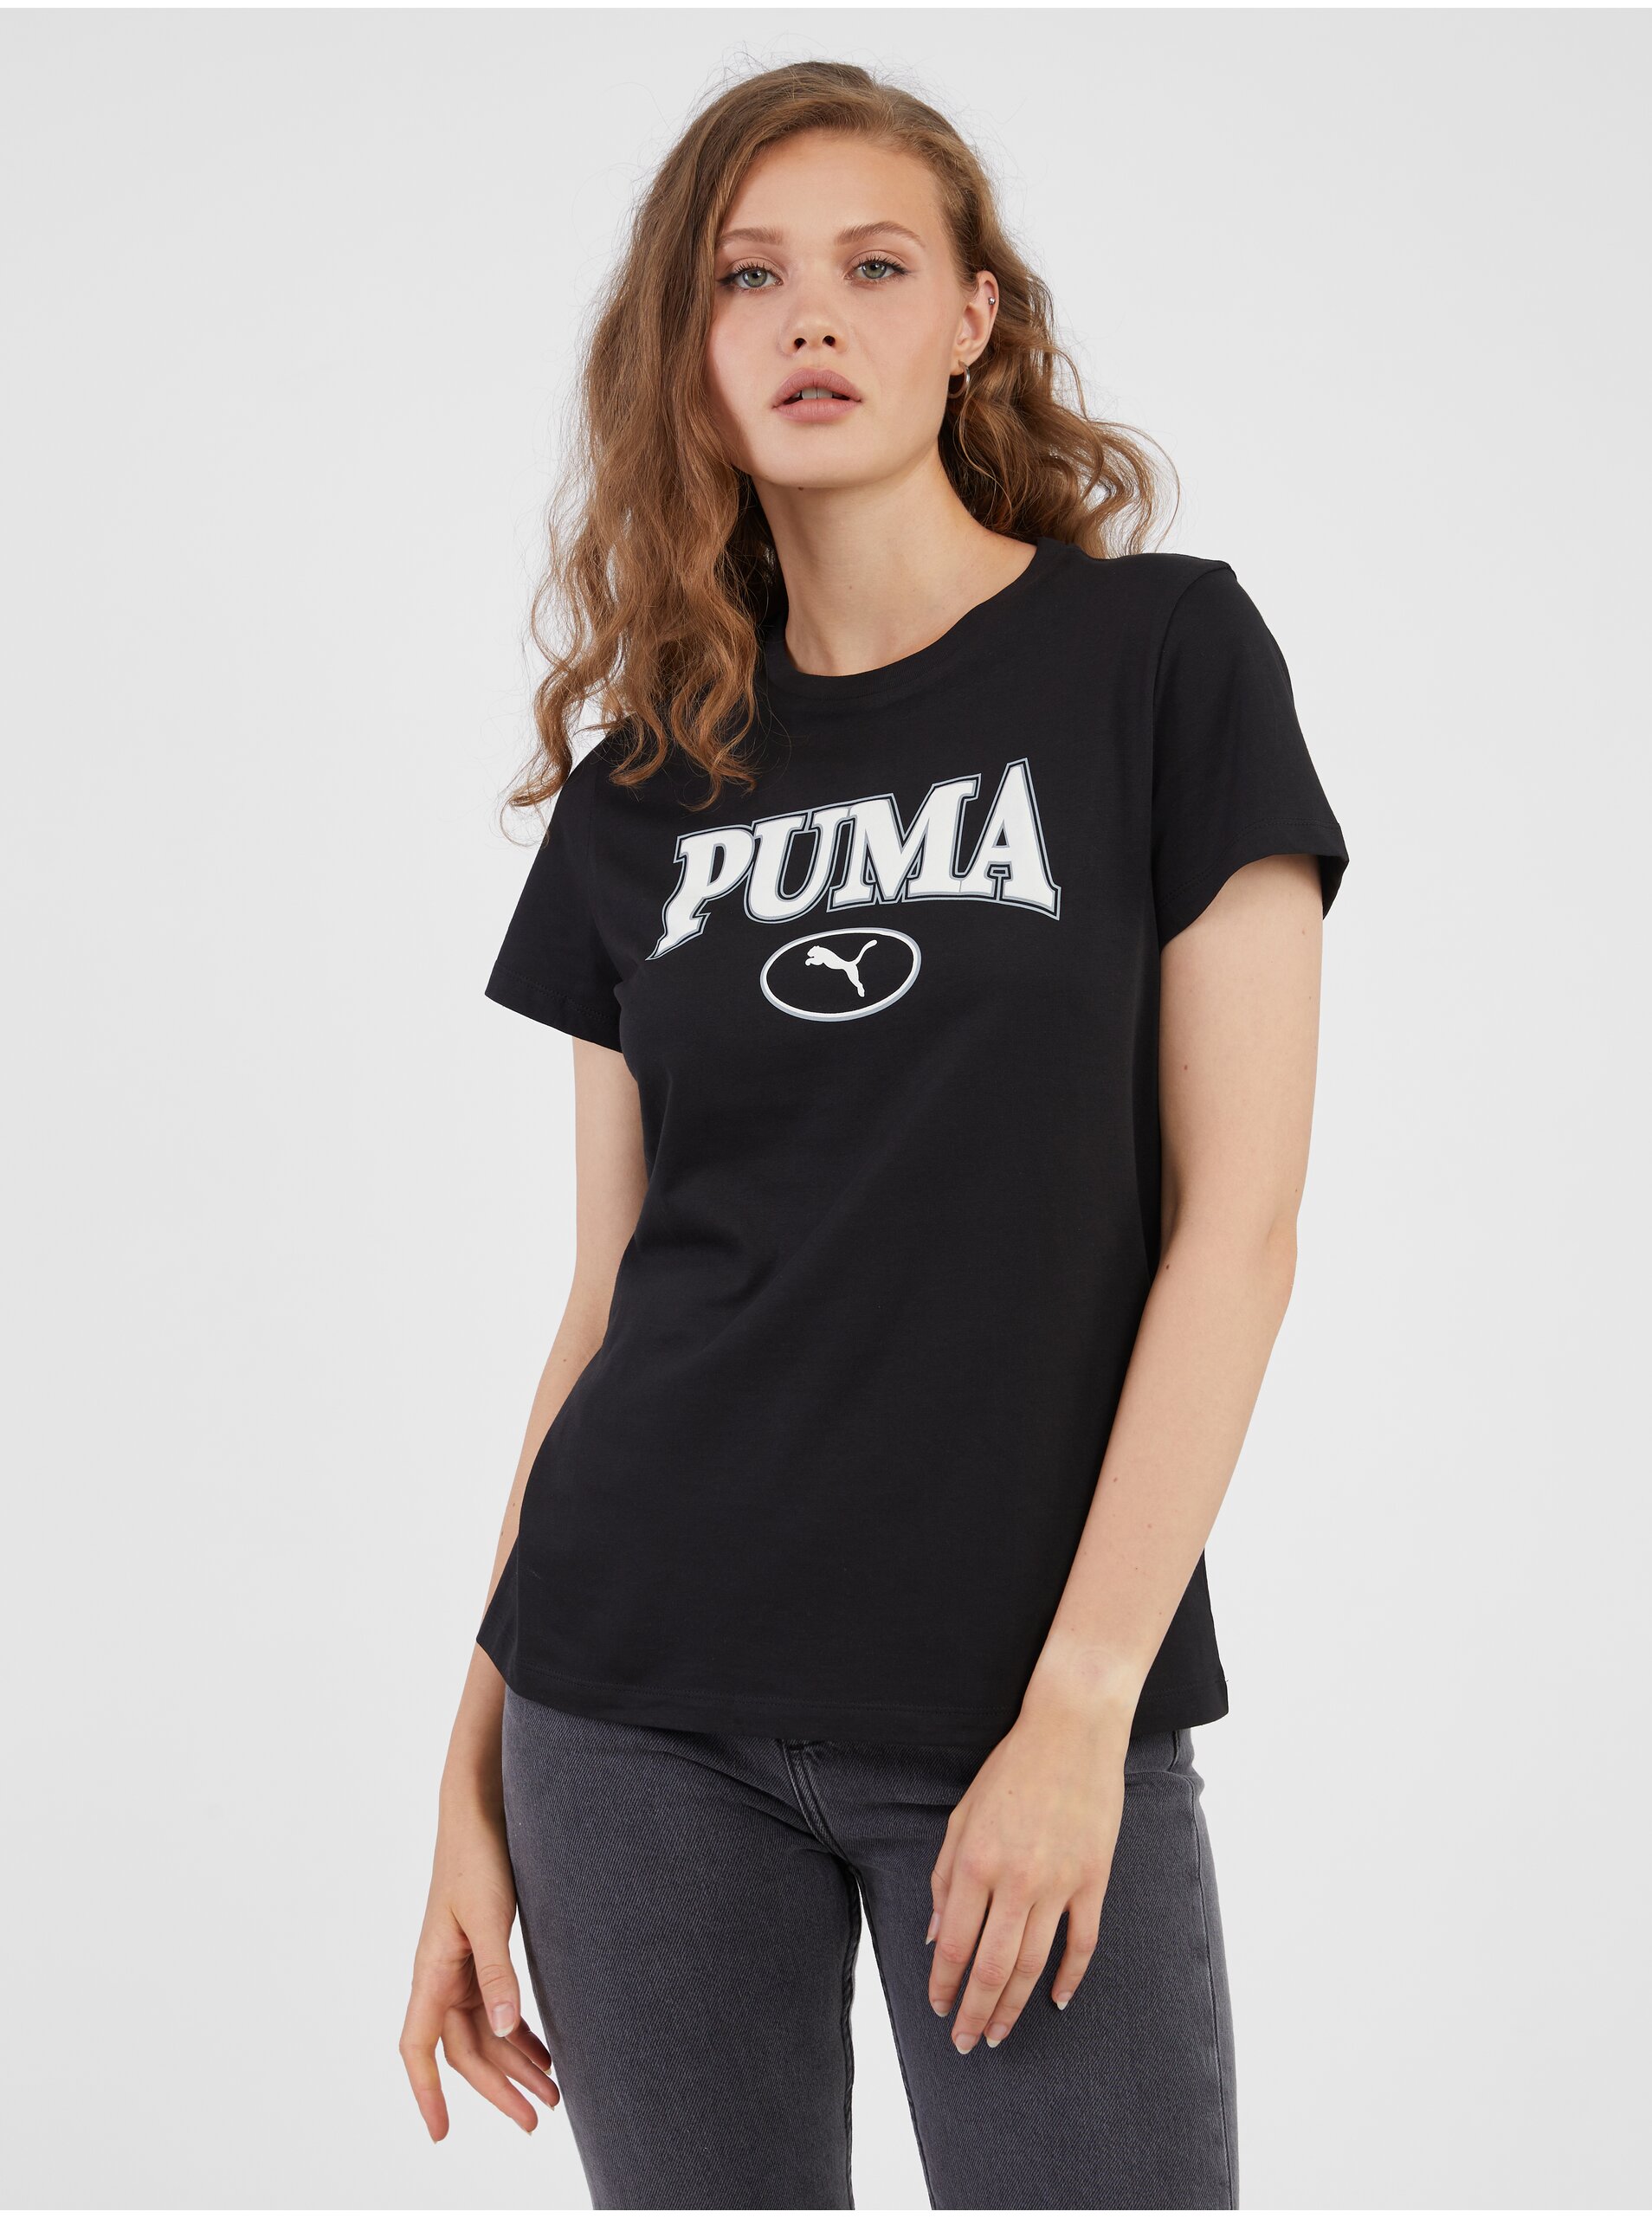 Lacno Čierne dámske tričko Puma Squad